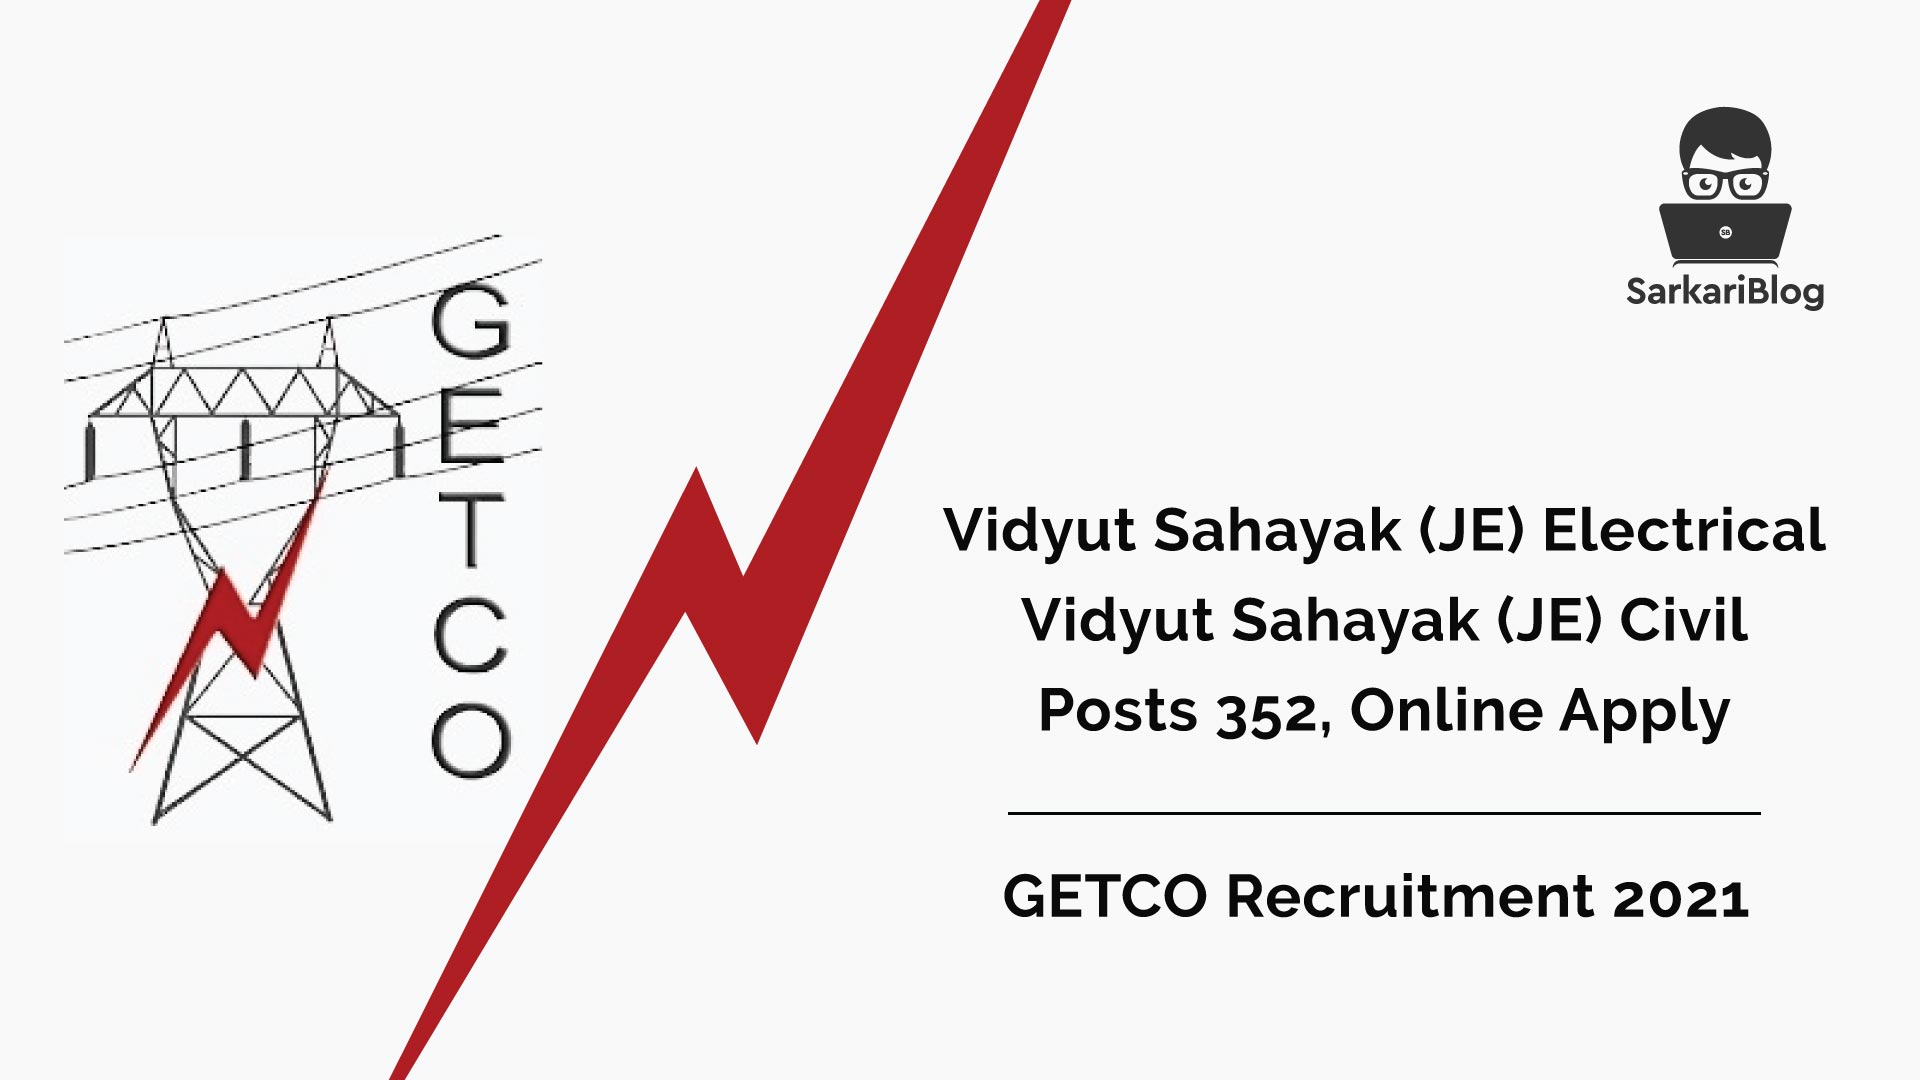 GETCO Recruitment 2021 Posts 352, online application